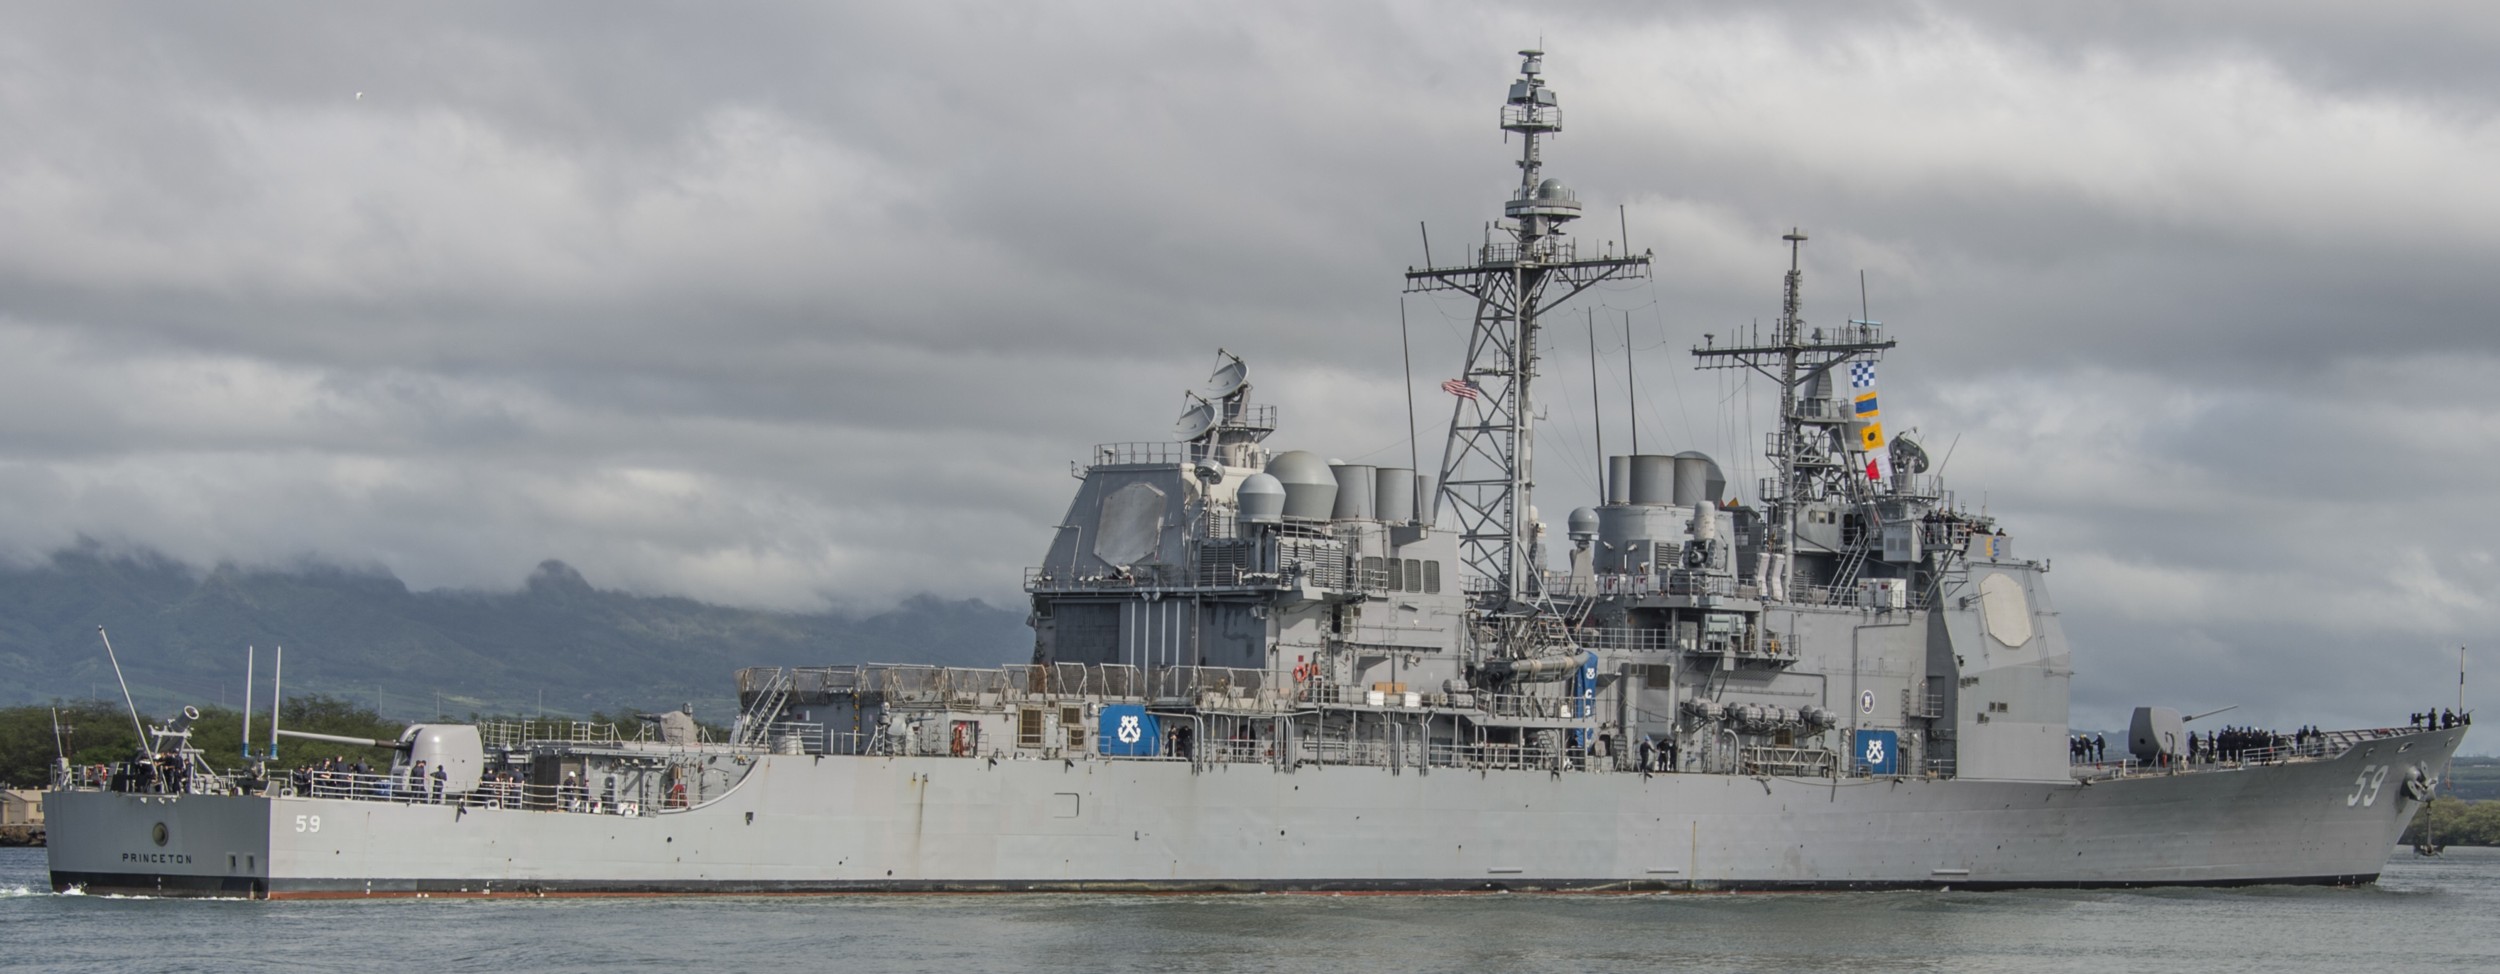 cg-59 uss princeton ticonderoga class guided missile cruiser aegis us navy rimpac 2016 hawaii 60